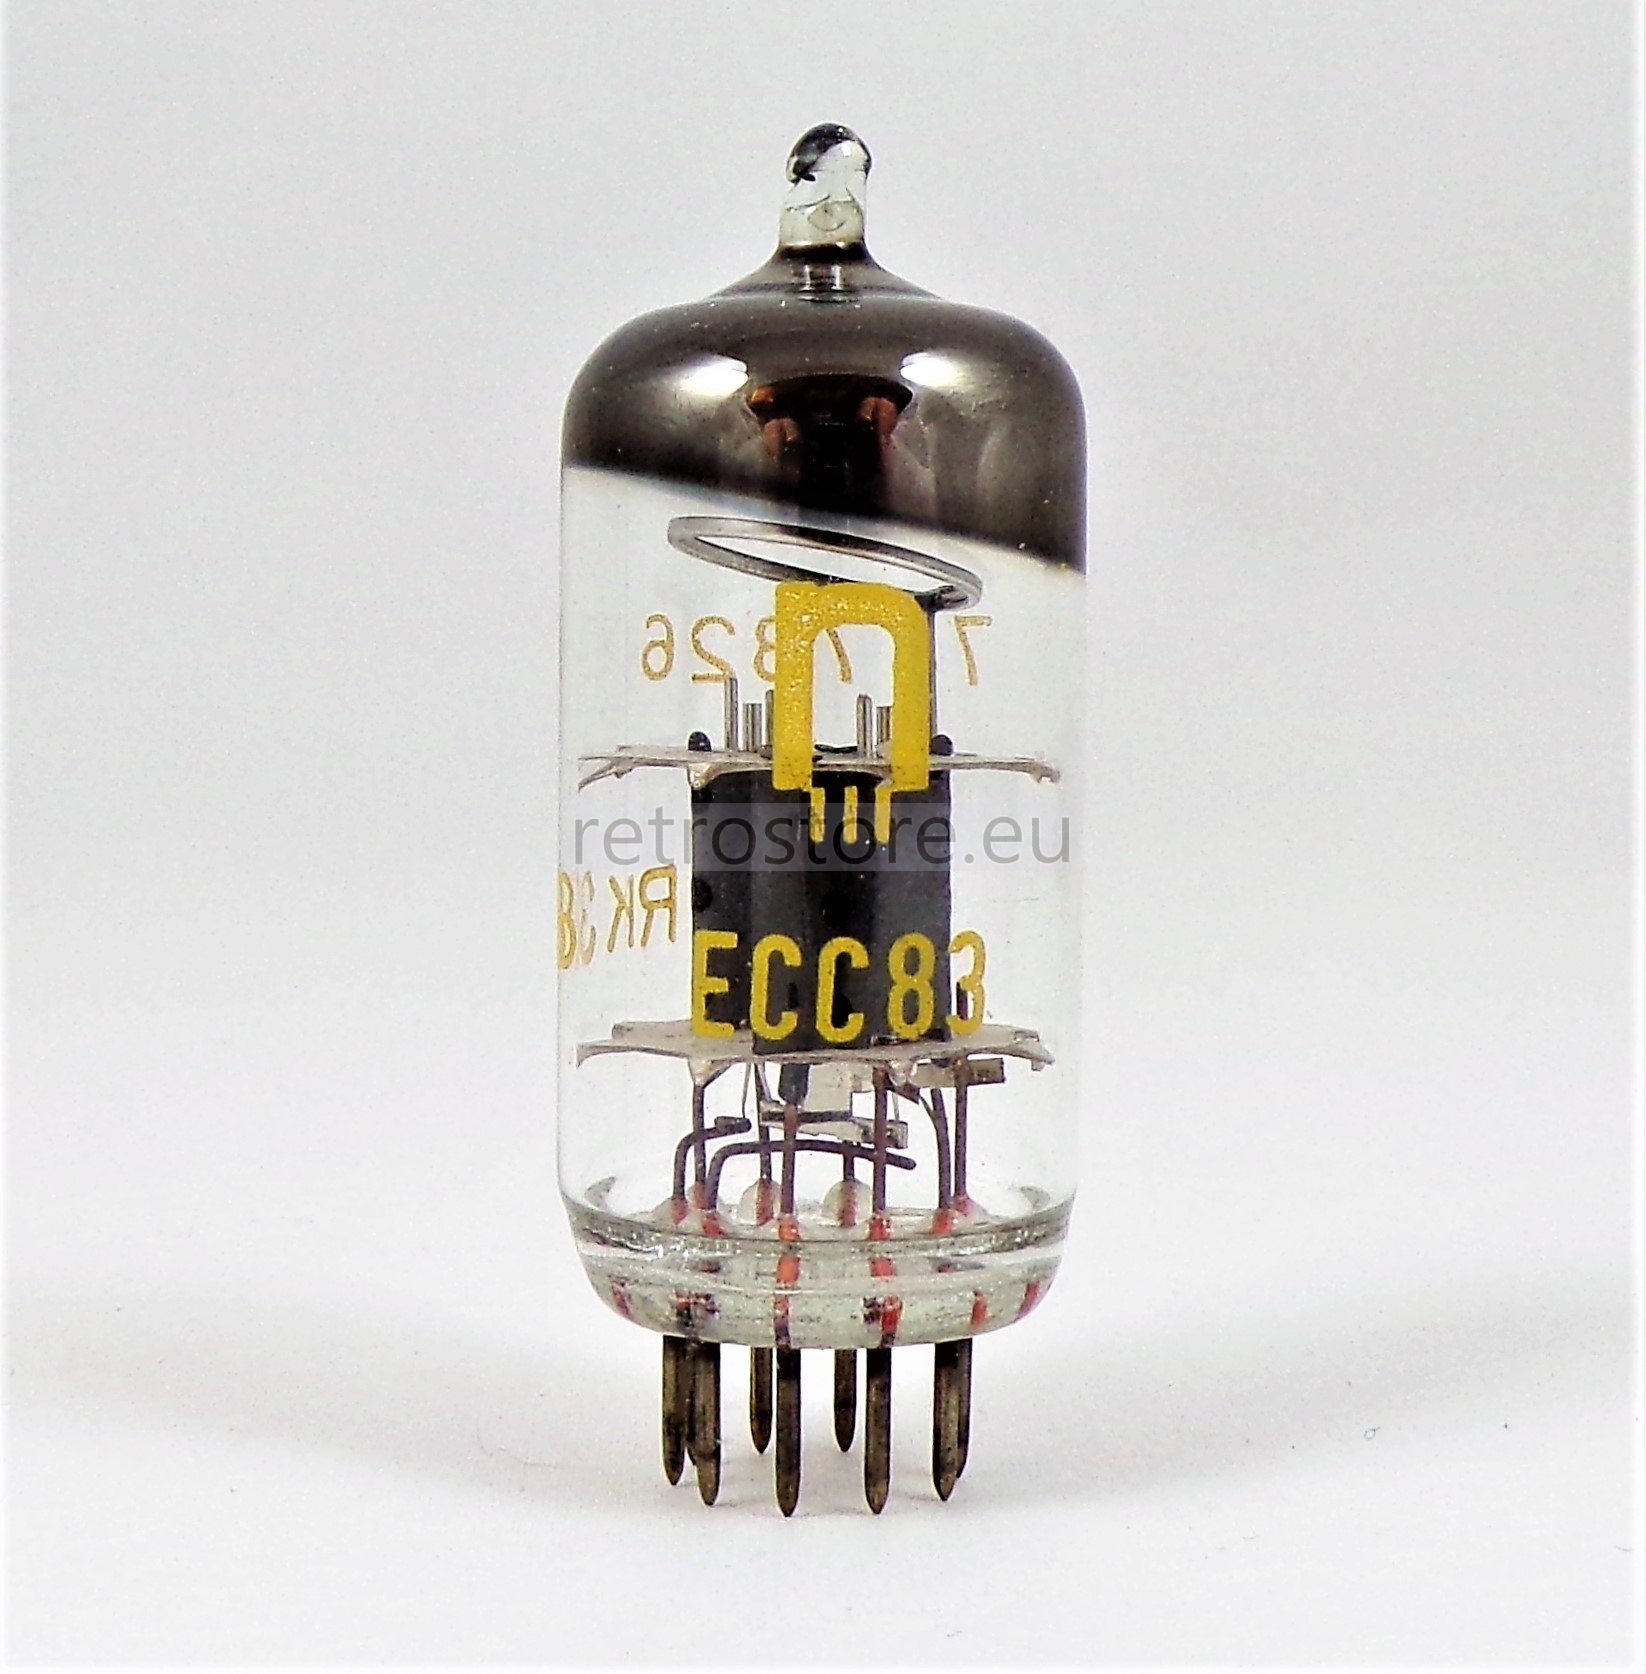 Electron tube ECC83 RFT = 12AX7 - RETROSTORE.EU.